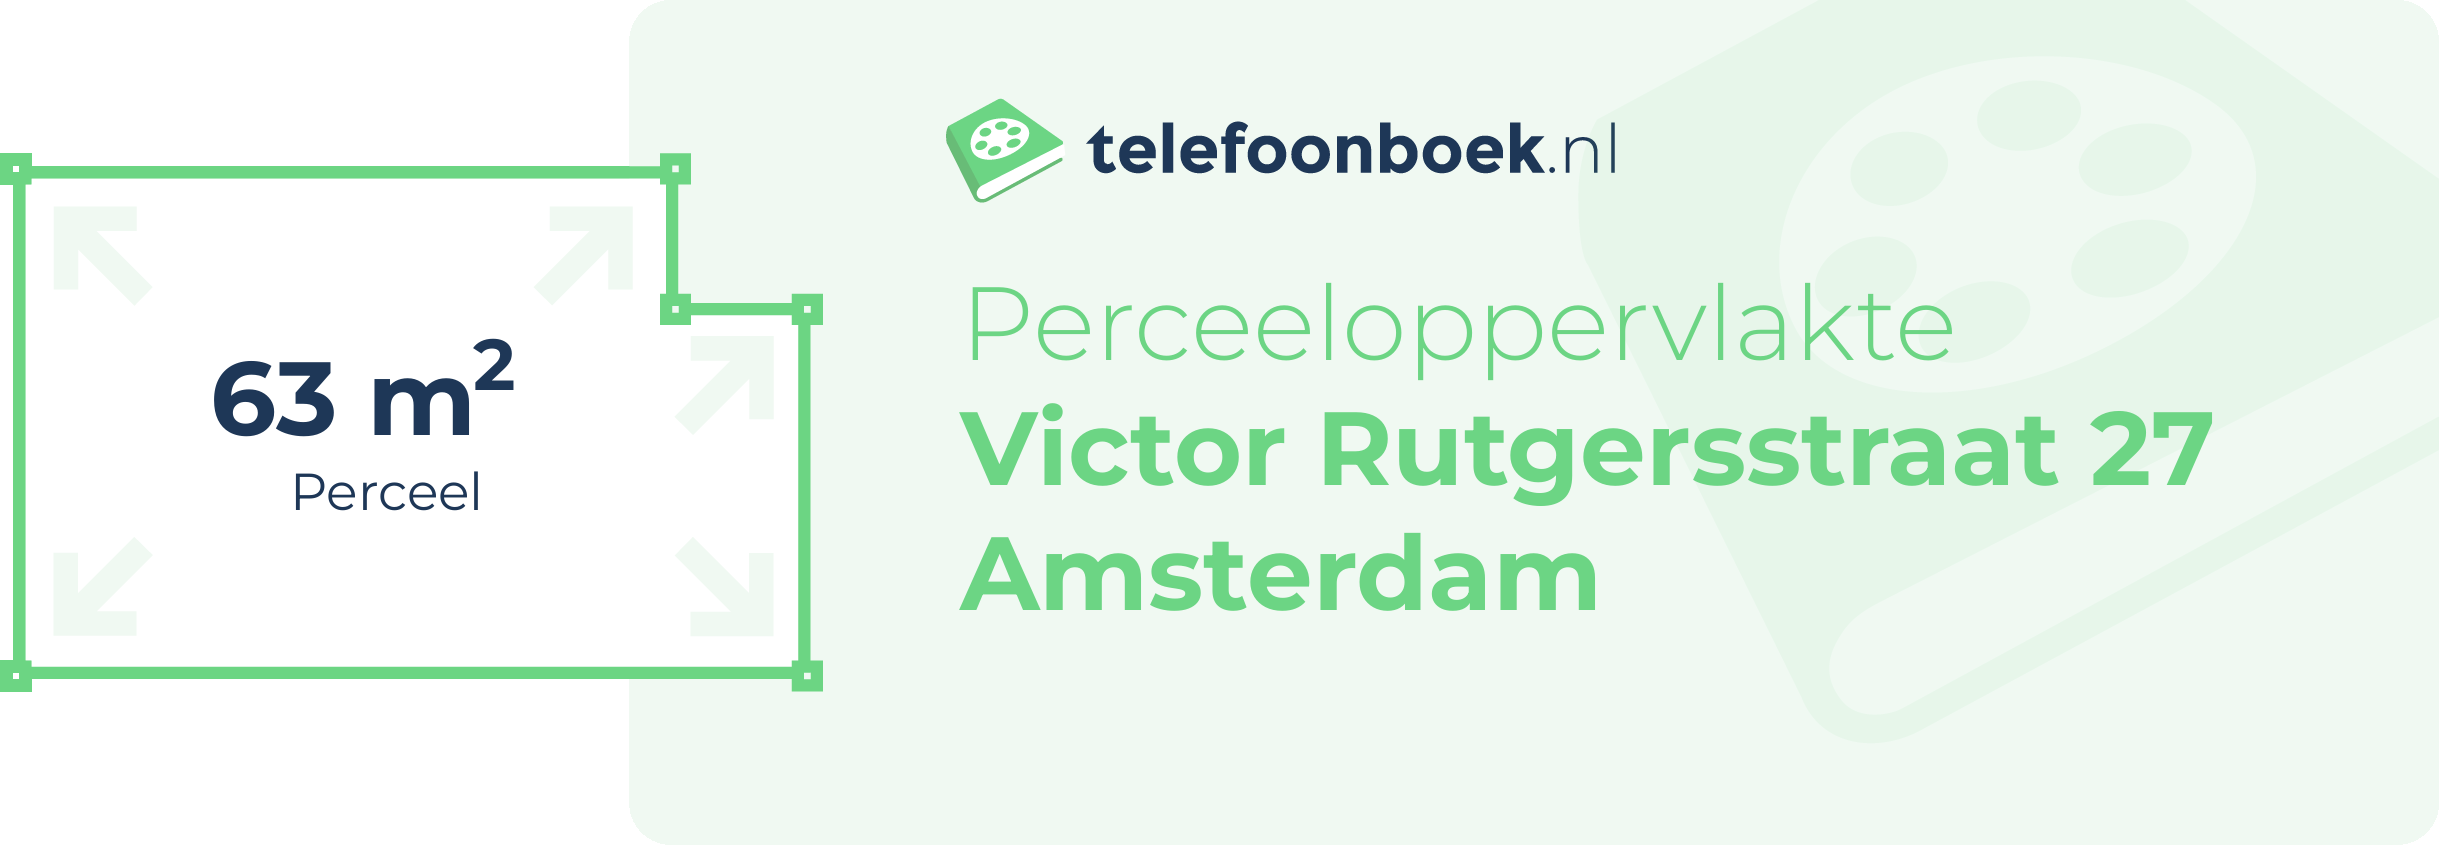 Perceeloppervlakte Victor Rutgersstraat 27 Amsterdam